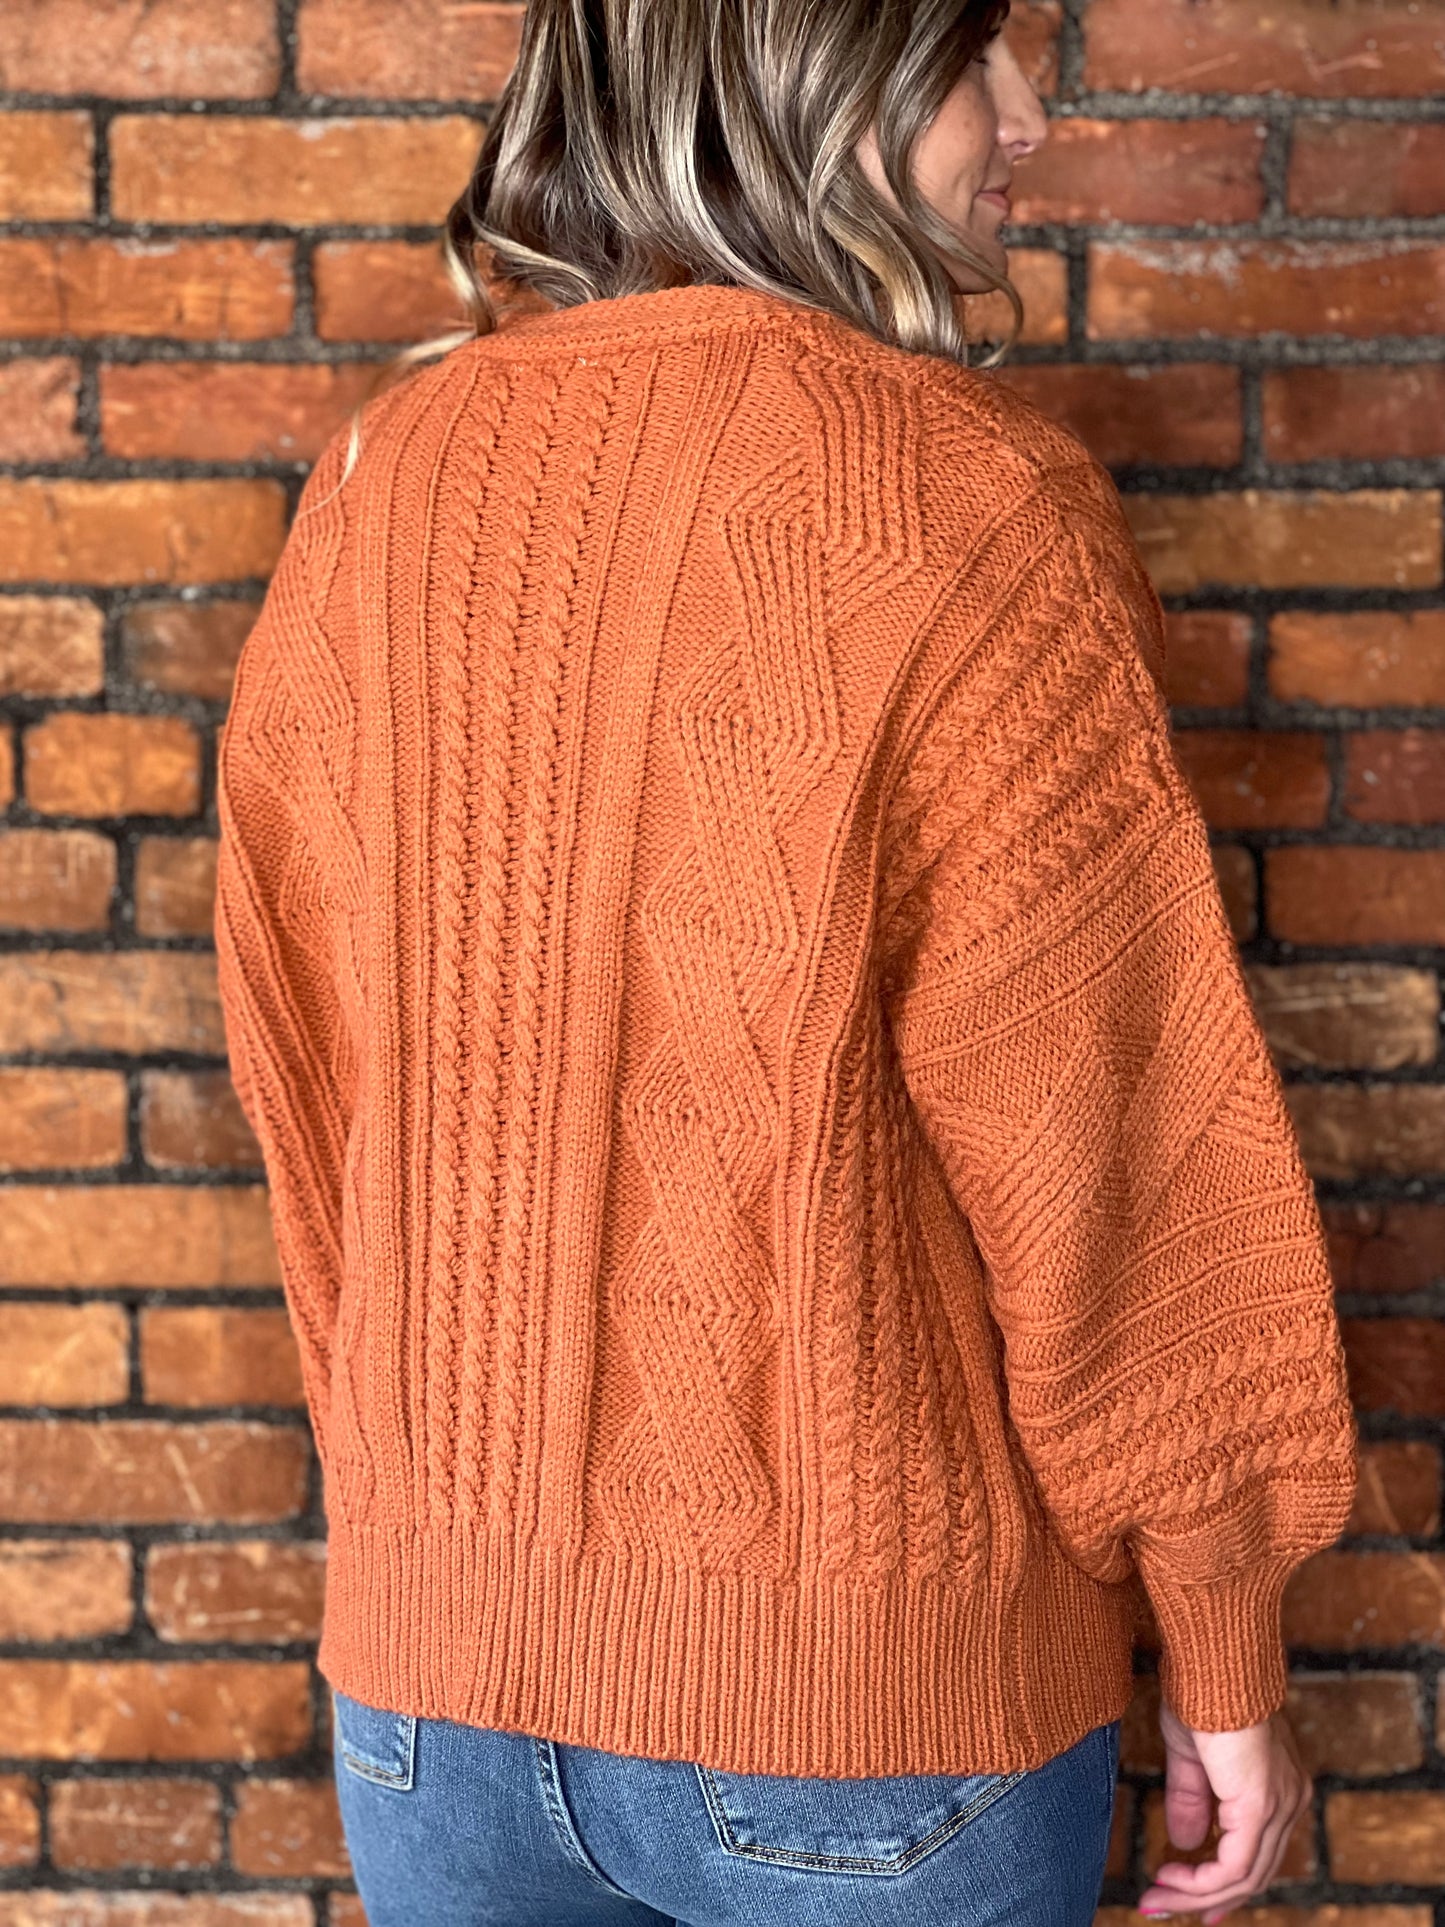 The Brick Sweater Cardigan